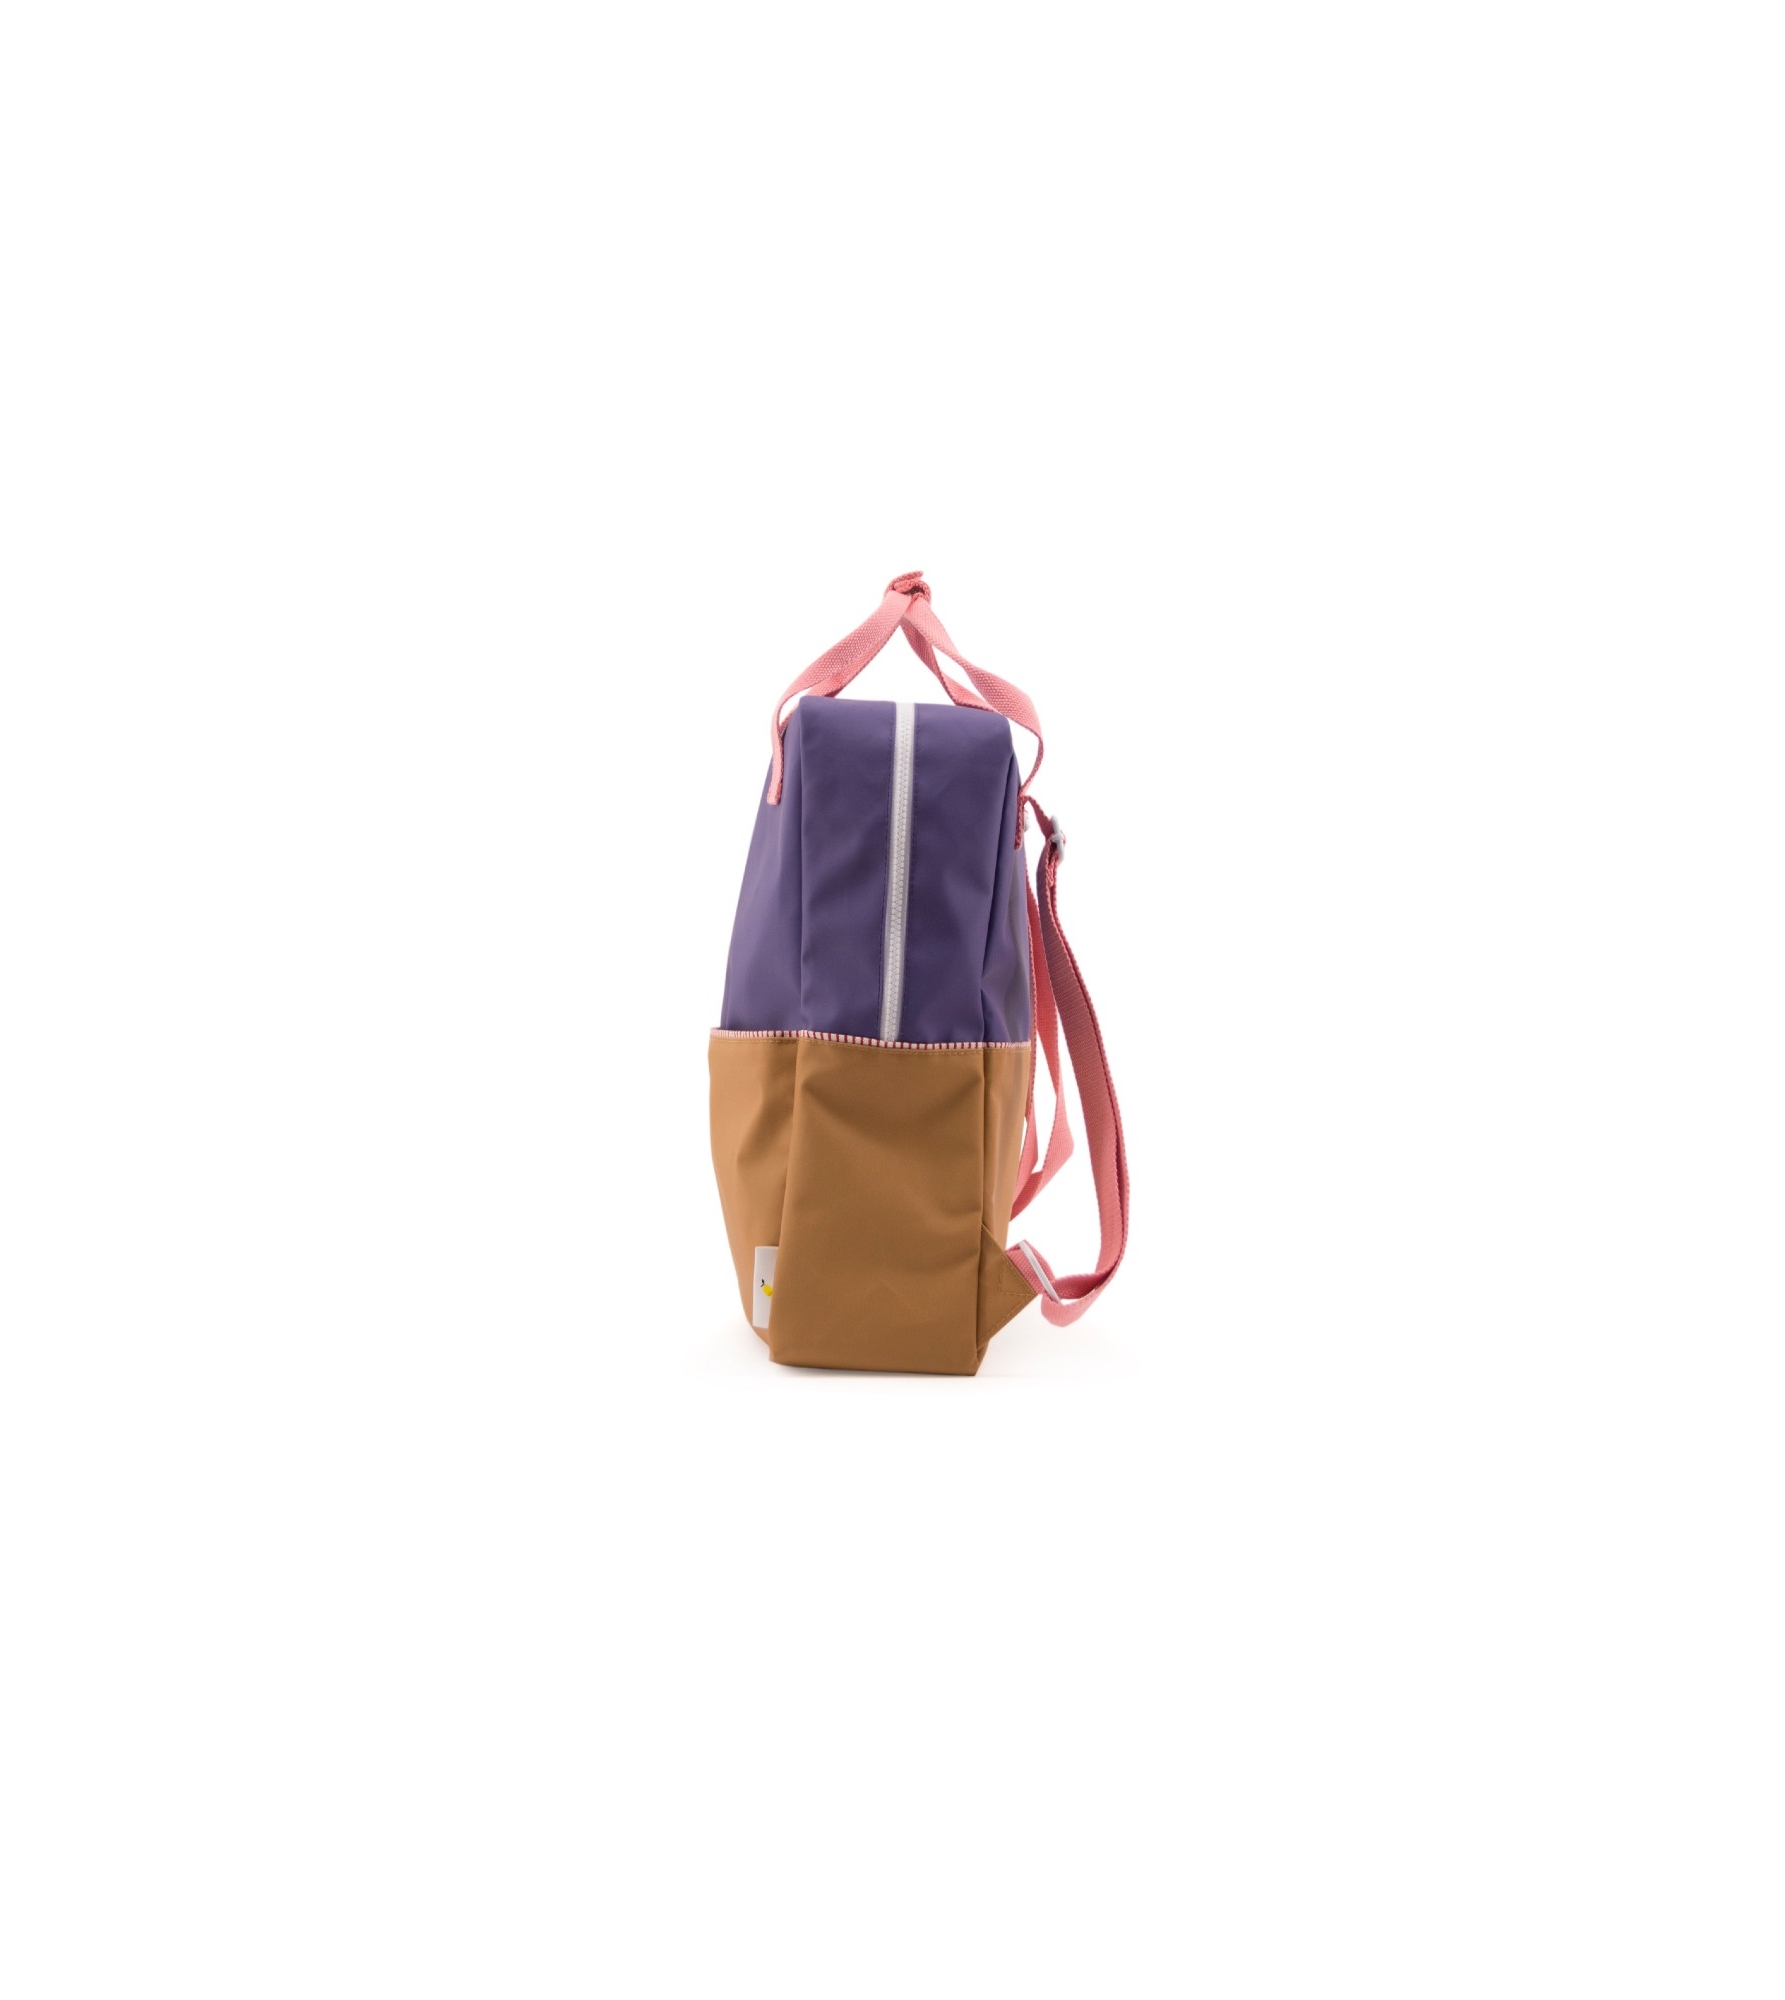 1801397 - Sticky Lemon - product - backpack large - colour blocking - panache gold, lobby purple (3)_edit.jpg